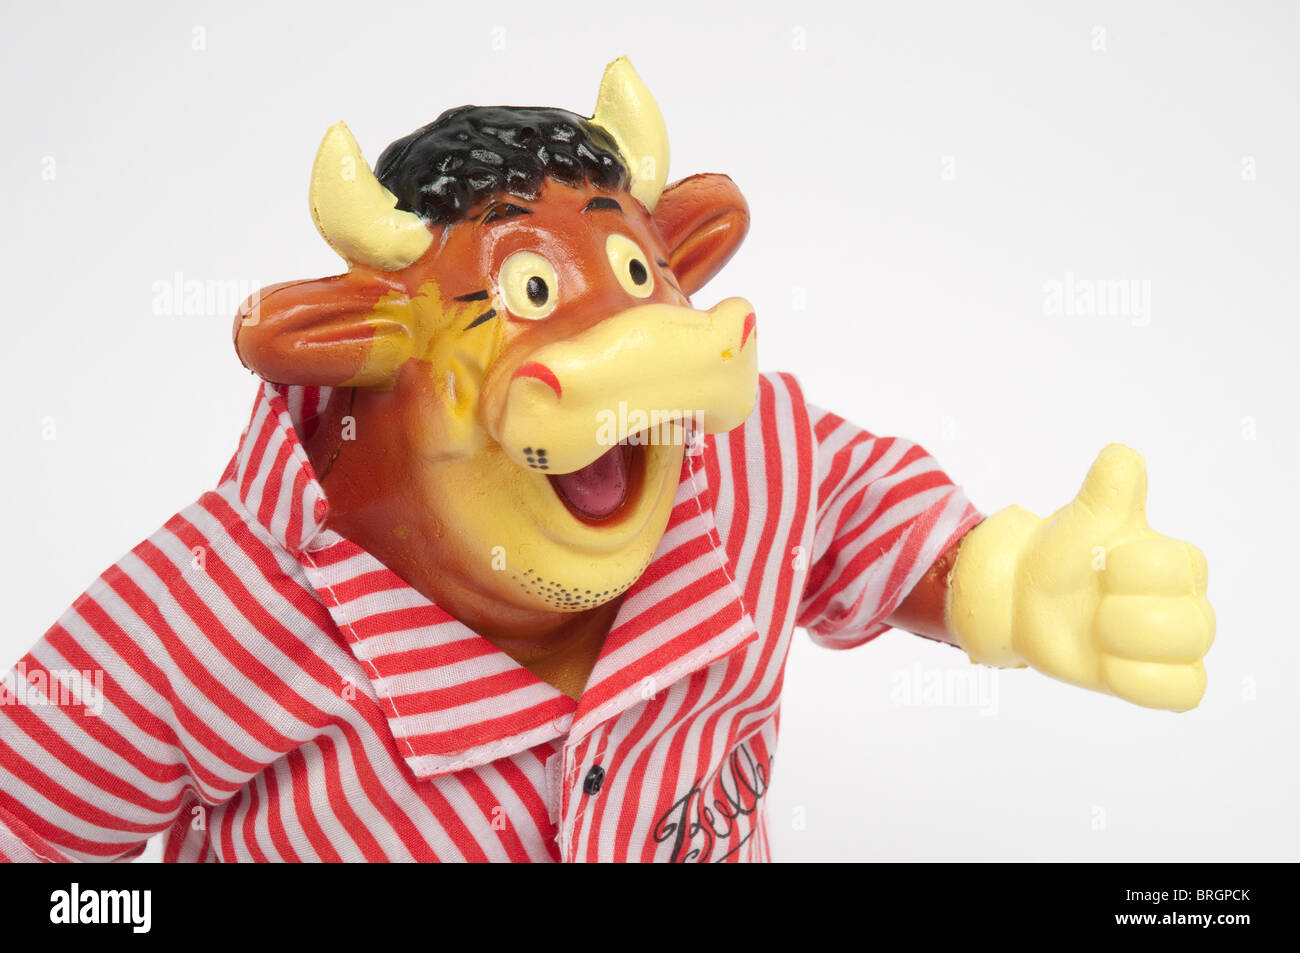 Bendy Bully toy, mascot of the Bullseye TV programme. Stock Photo